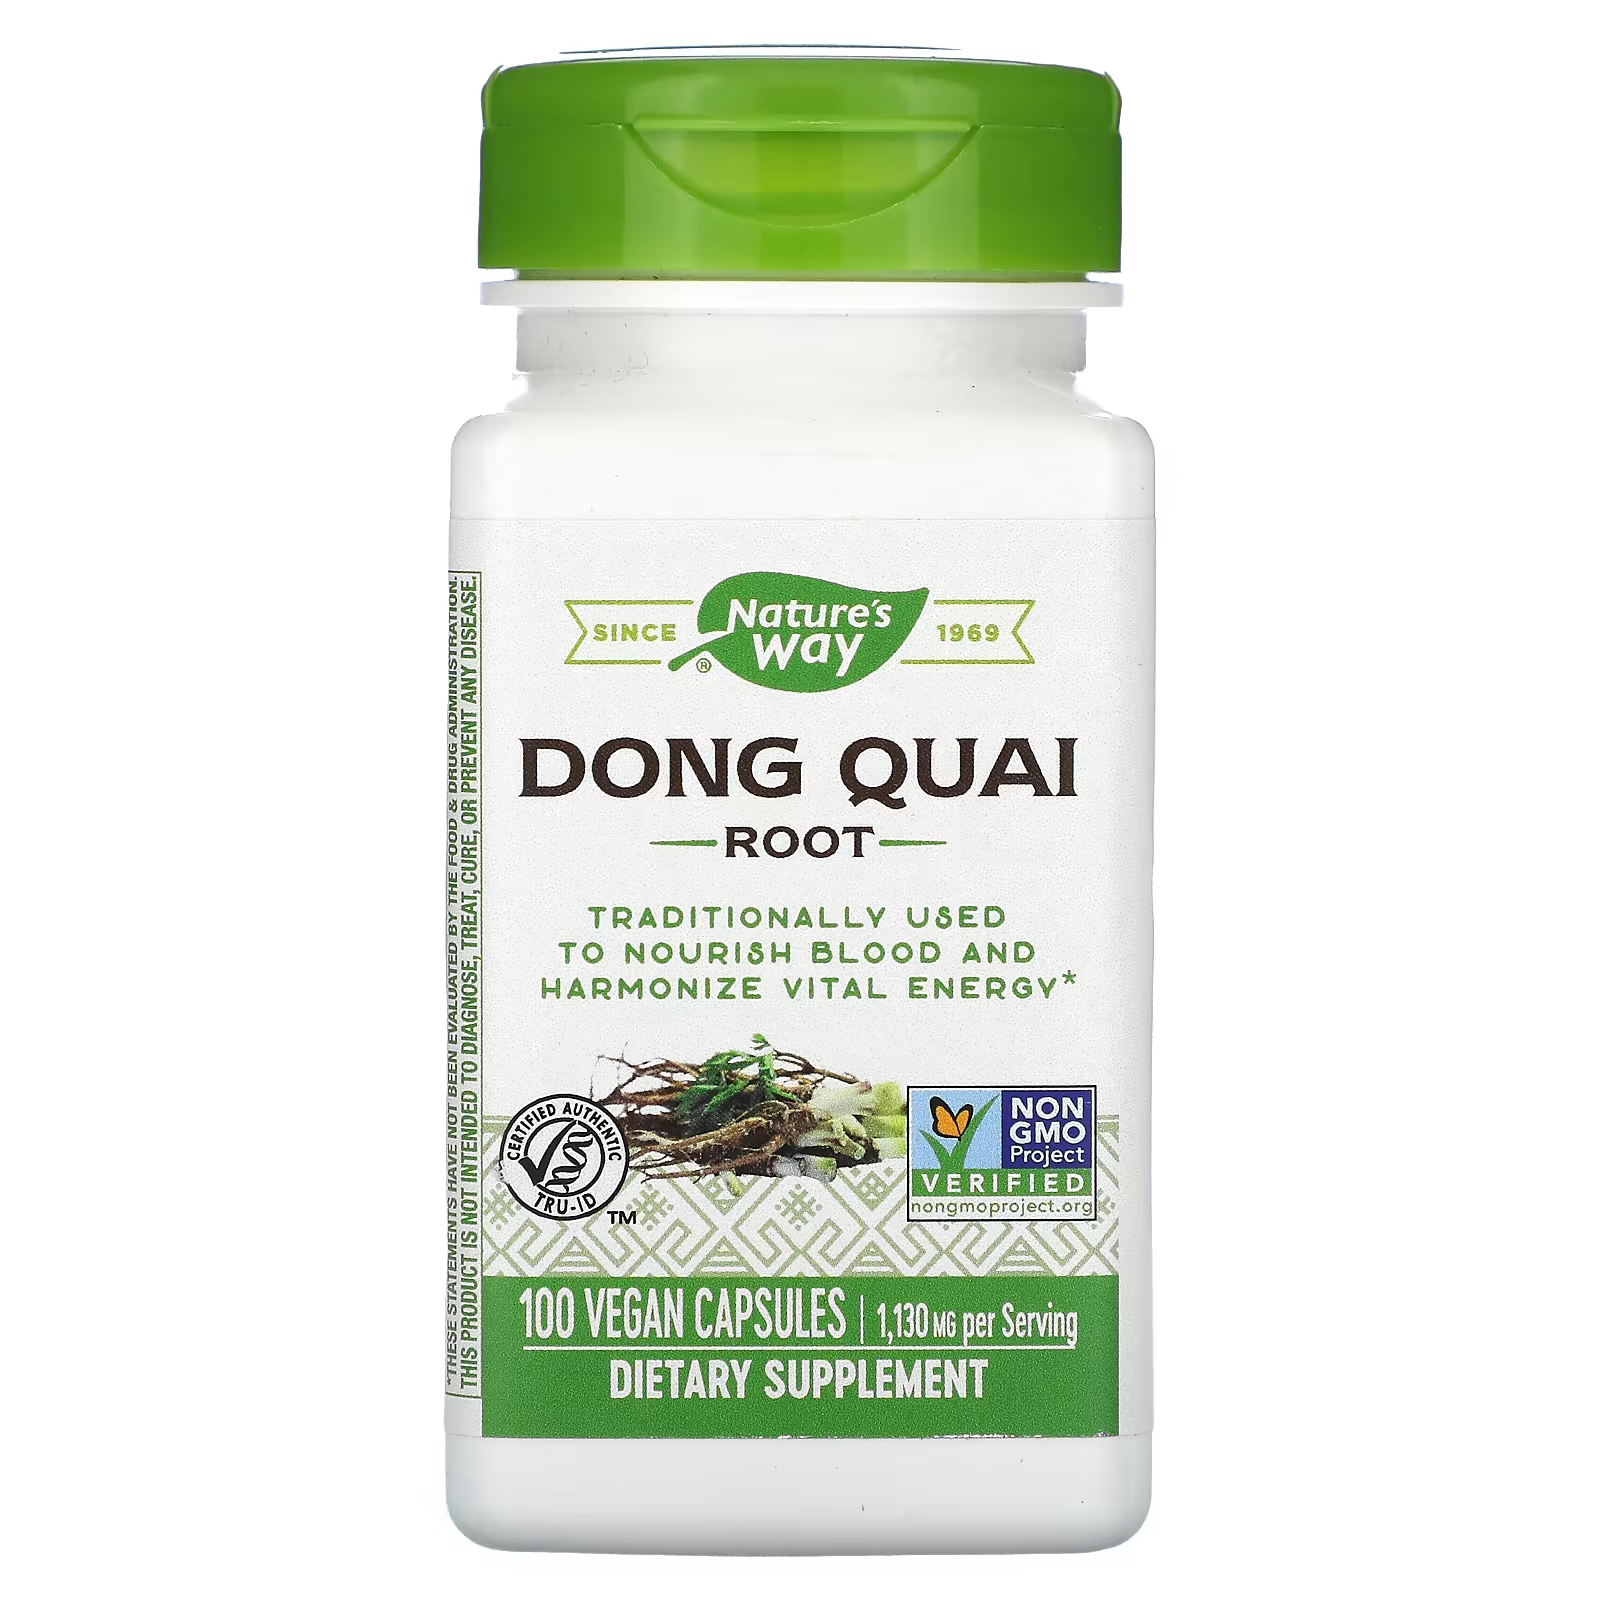 биологически активная добавка solgar dong quai root extract 100 шт Пищевая добавка Nature's Way Dong Quai Root 1130 мг, 100 веганских капсул